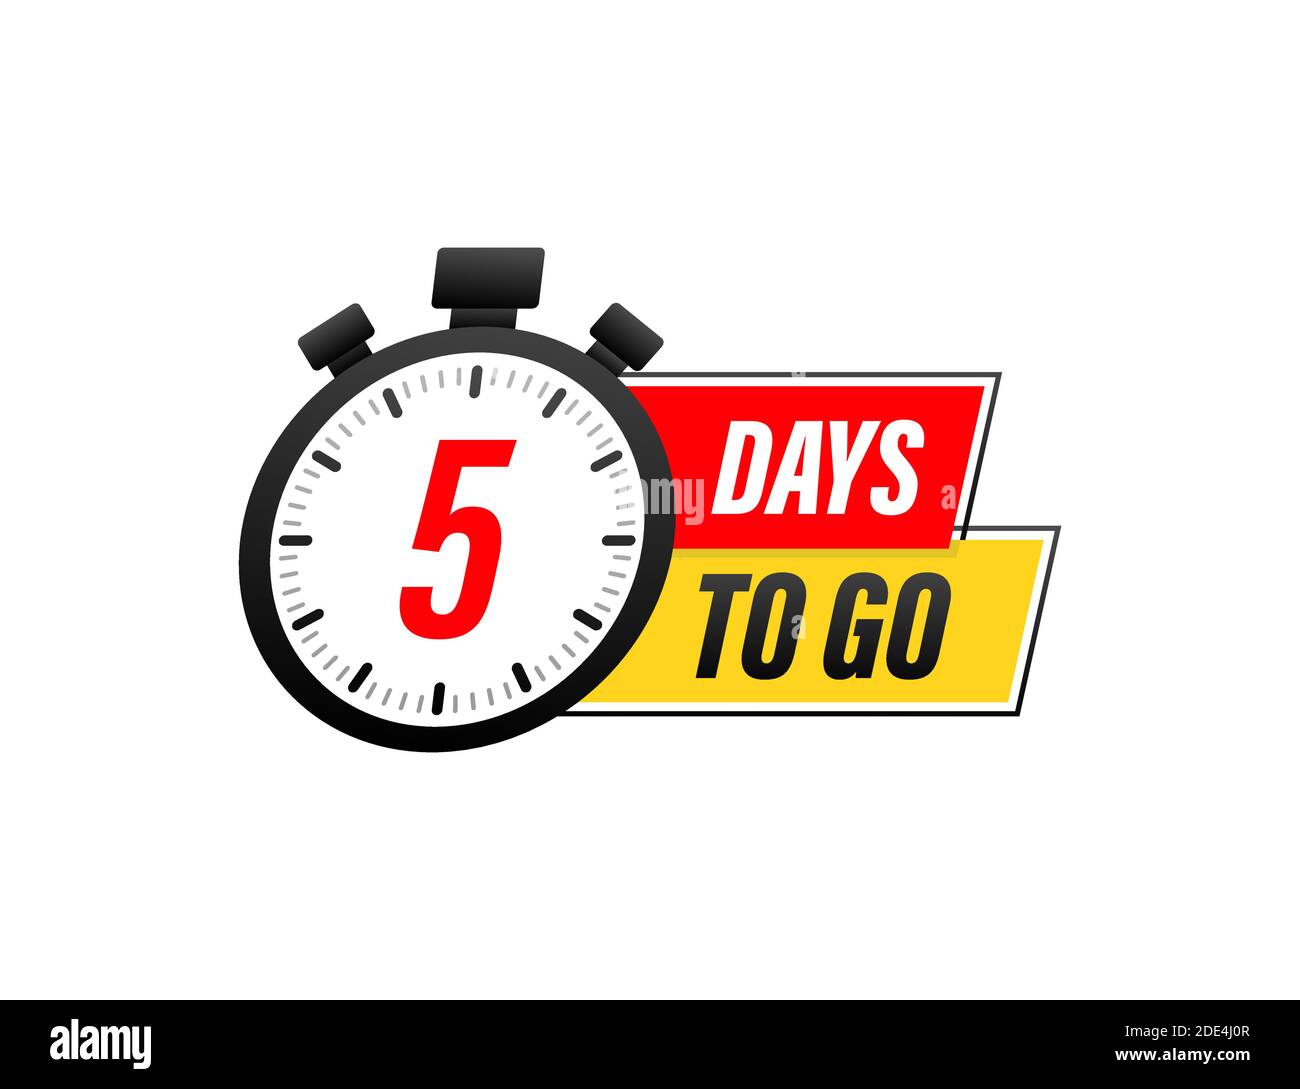 Noch 5 Tage. Countdown-Timer. Uhrsymbol. Zeitsymbol. Zeitverkauf zählen.  Vektorgrafik Stock-Vektorgrafik - Alamy